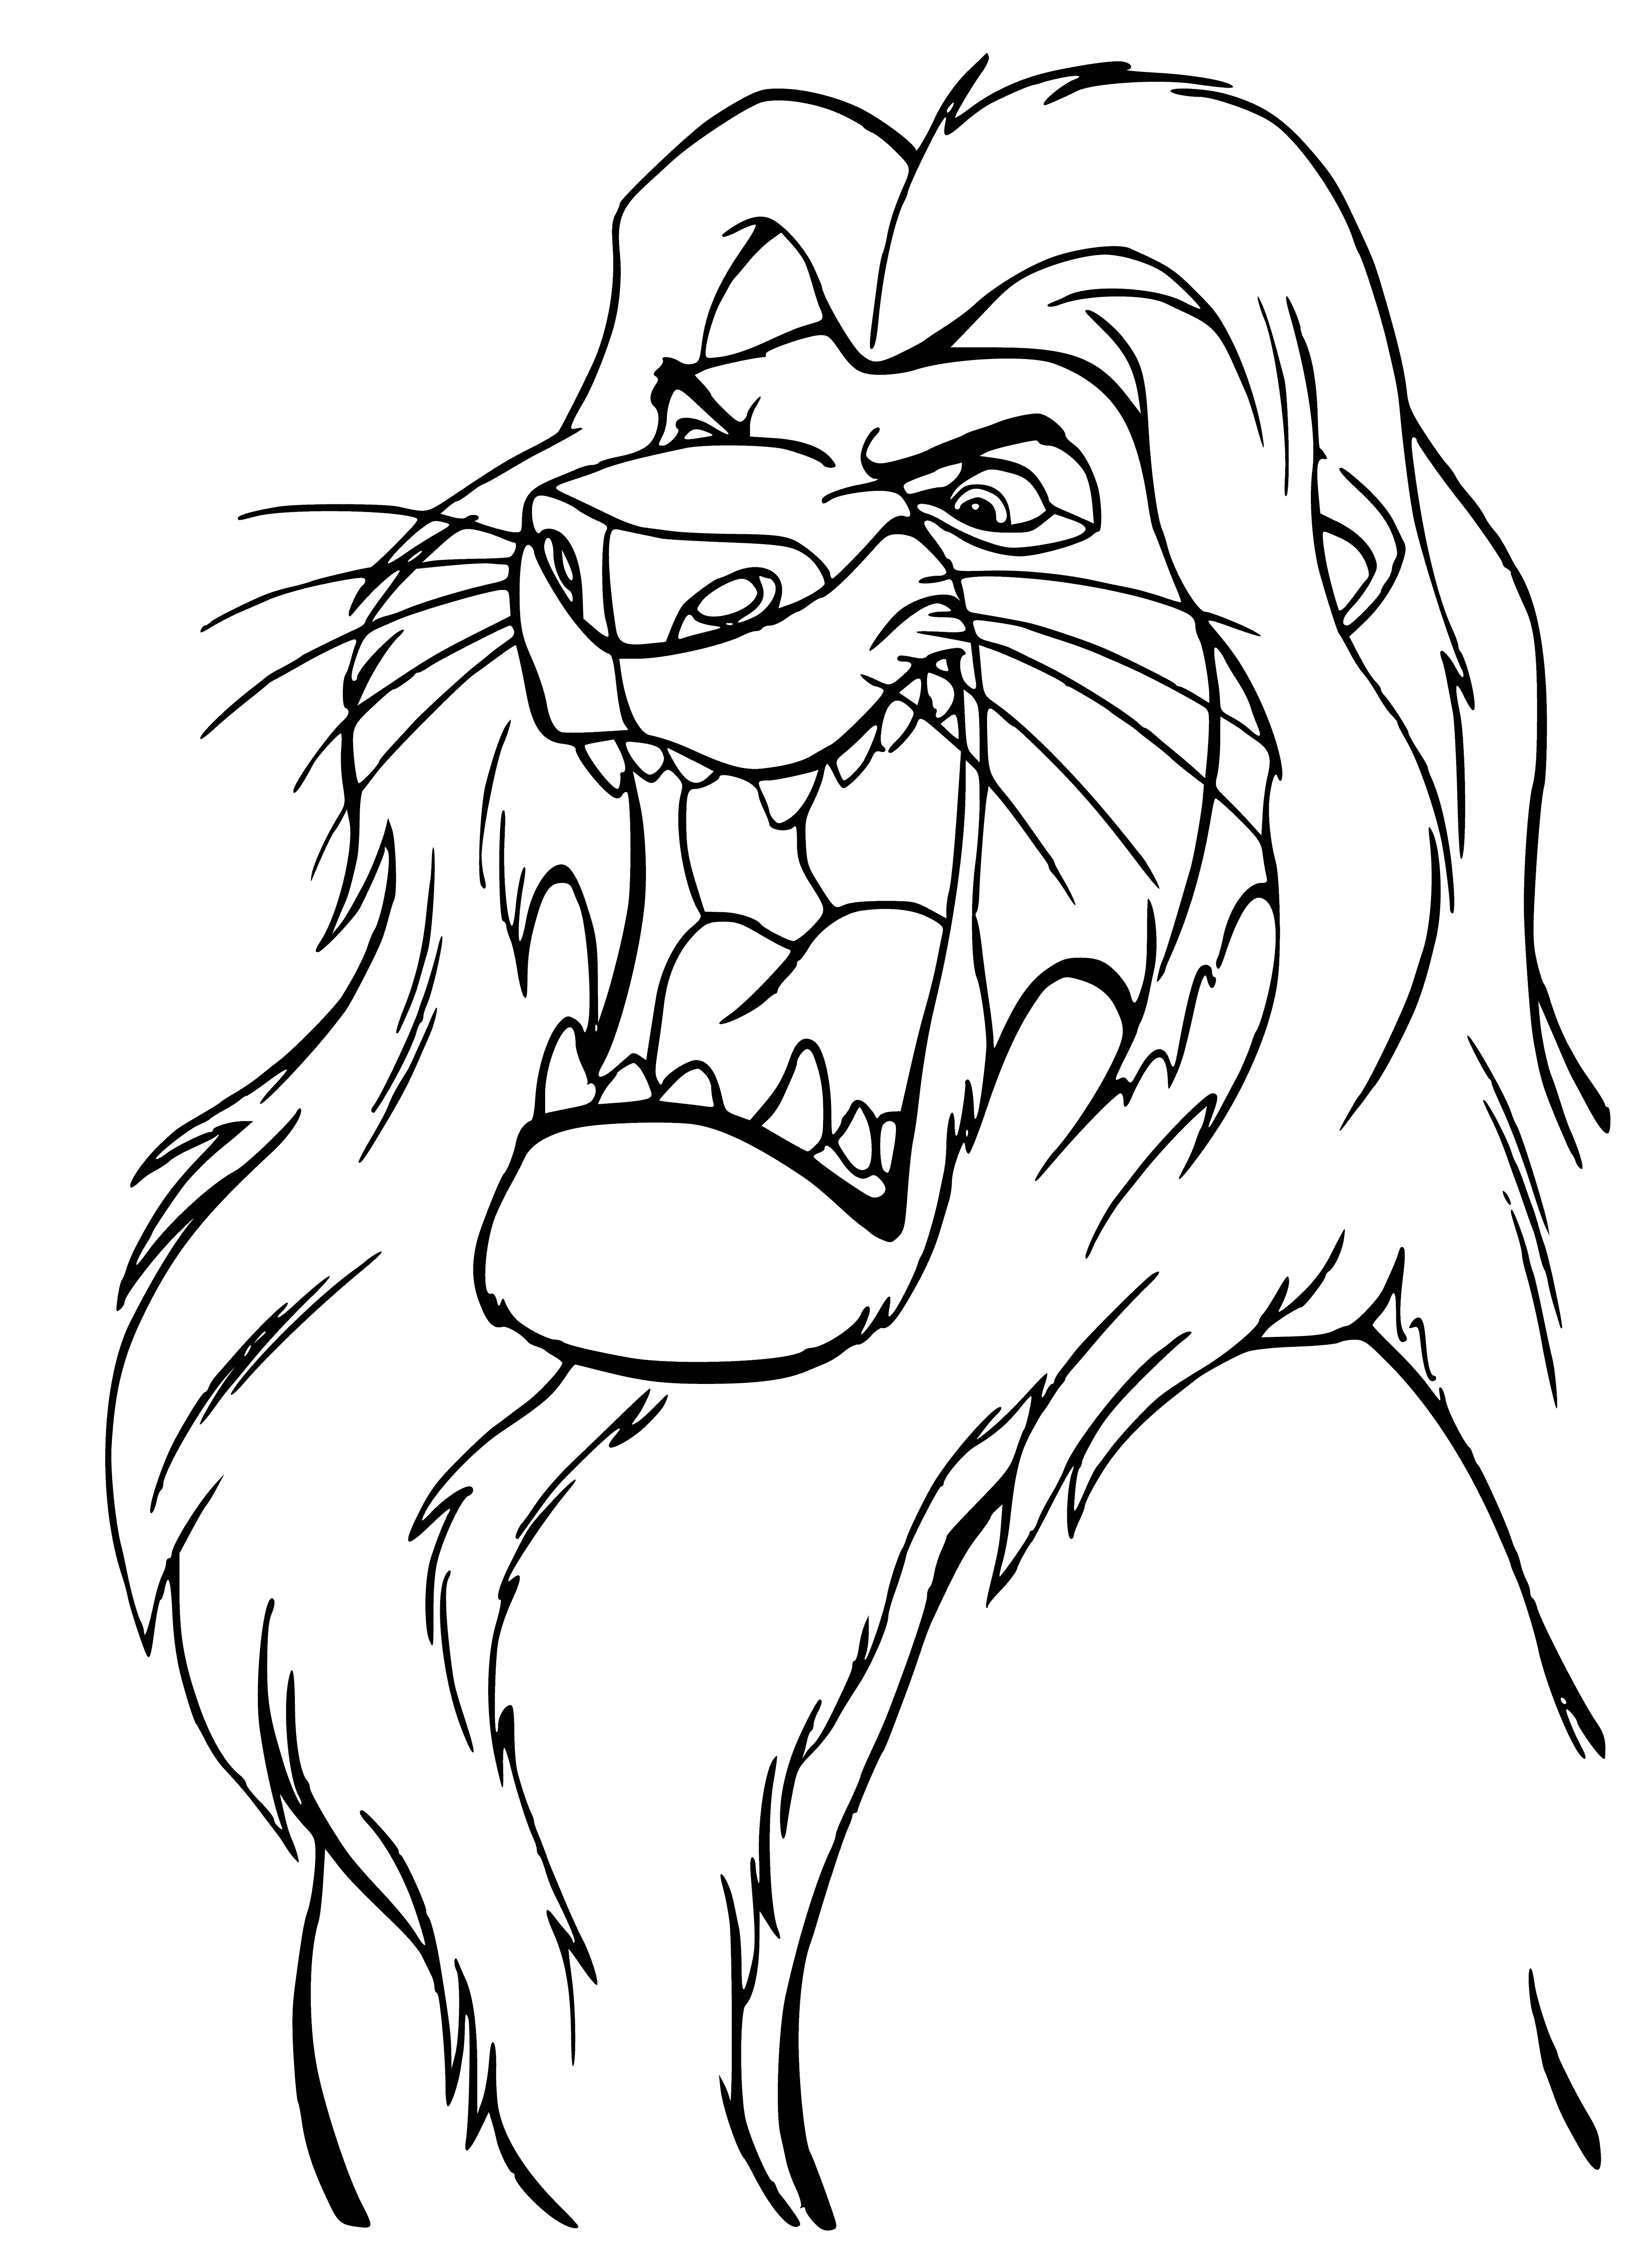 King Mufasa coloring page